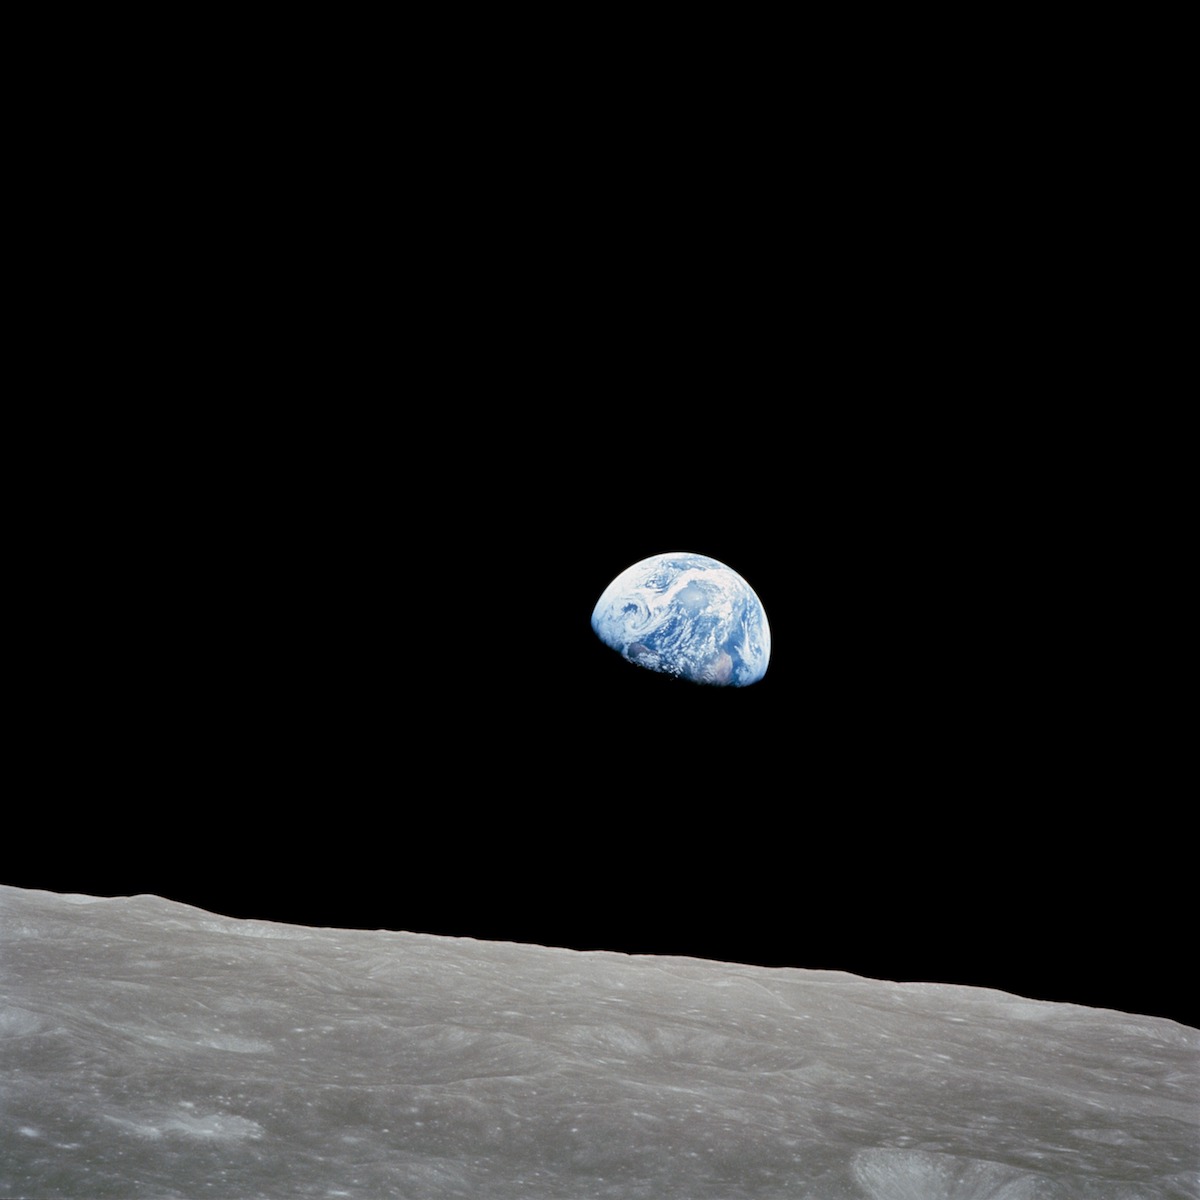 blue Earth against a black sky above the barren lunar surface